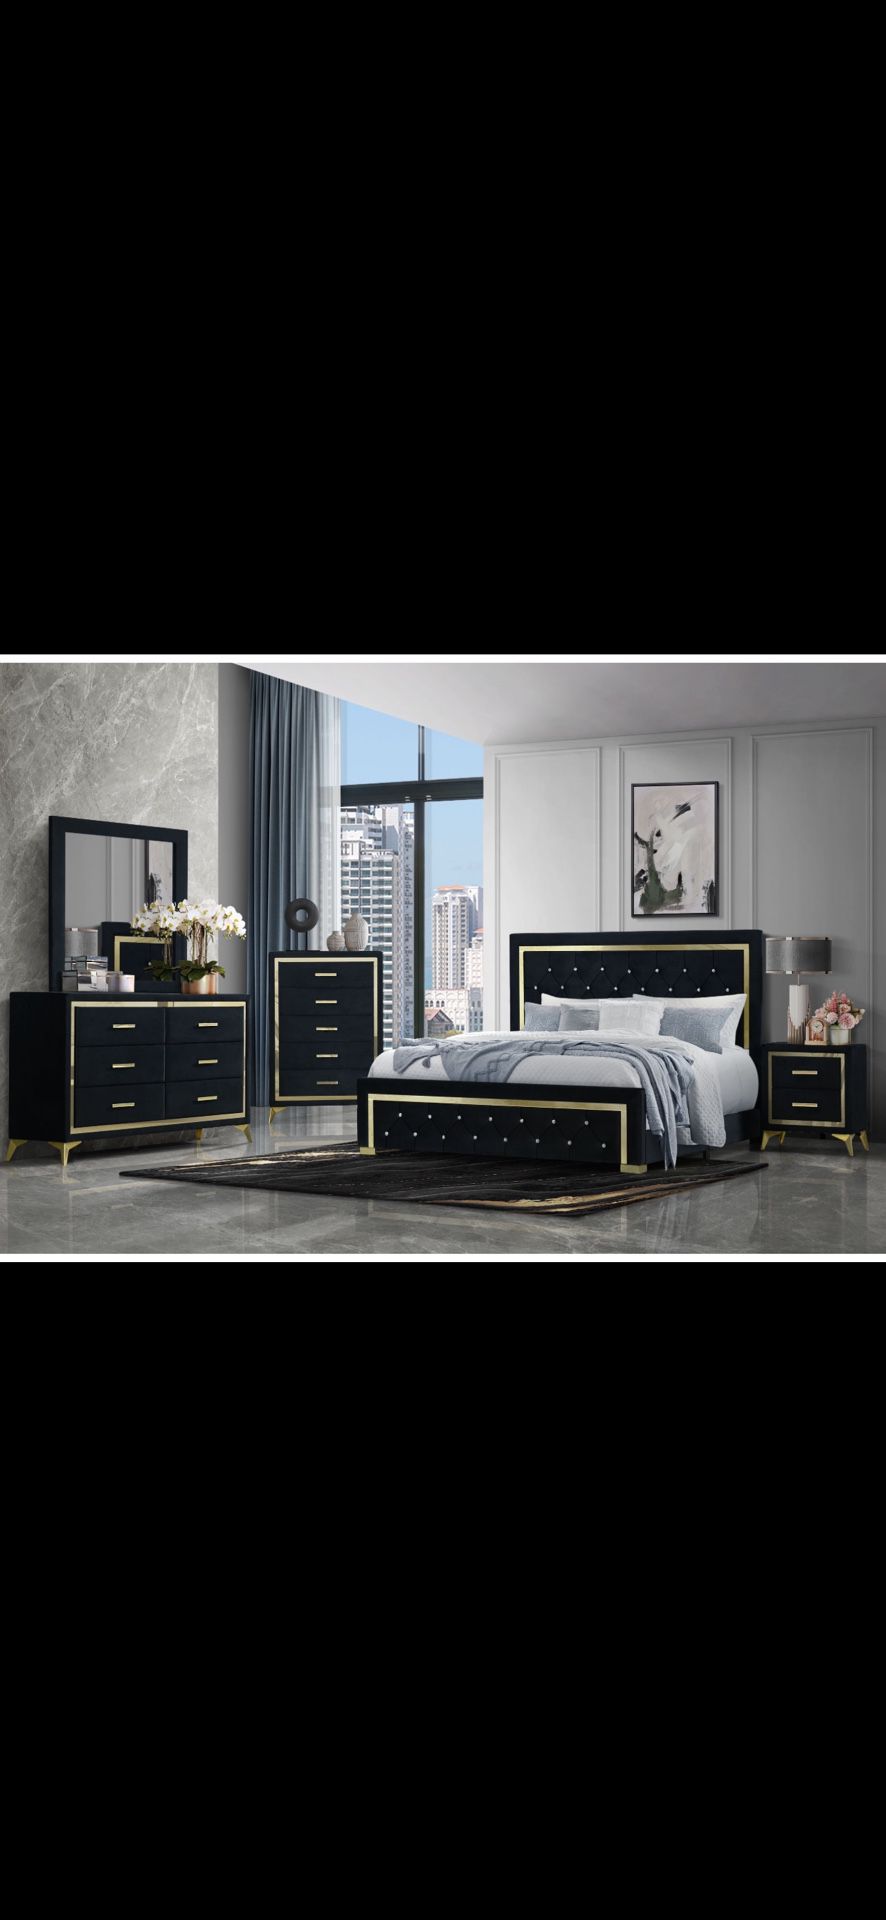 Brand New Complete Bedroom Set For $1199